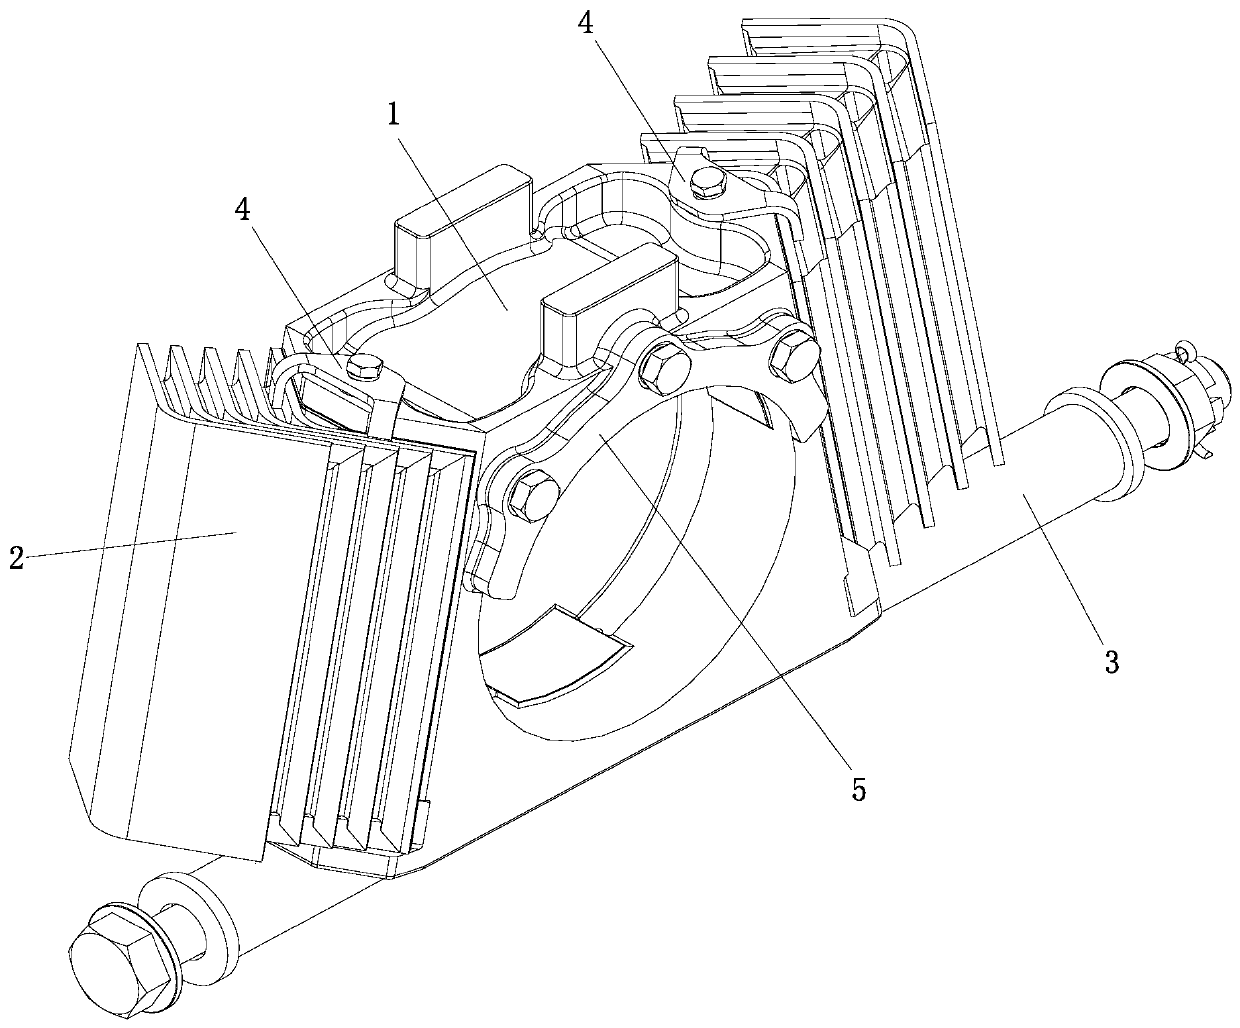 Built-in axle box mechanism for axle box built-in bogies